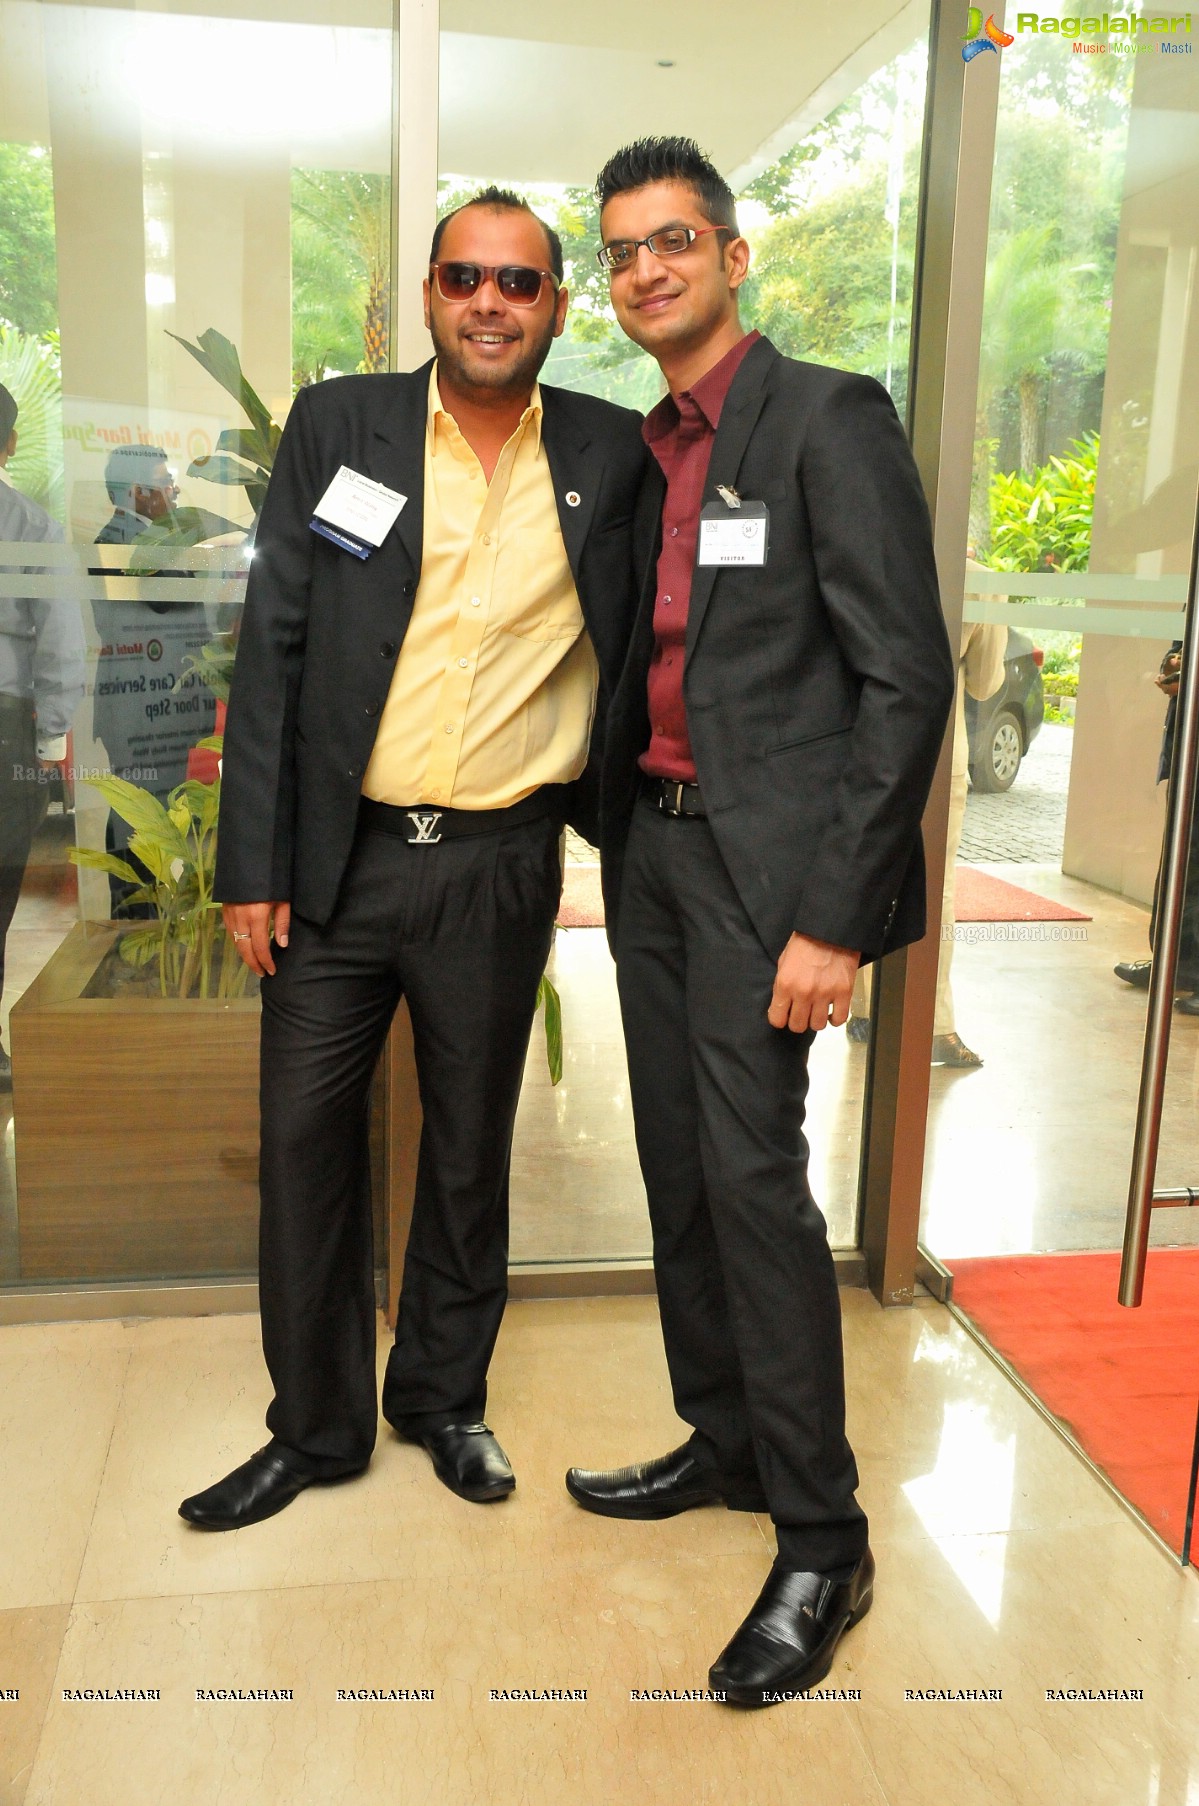 BNI Icon Meet at Radisson Blu Plaza, Hyderabad (Sep. 16, 2014)